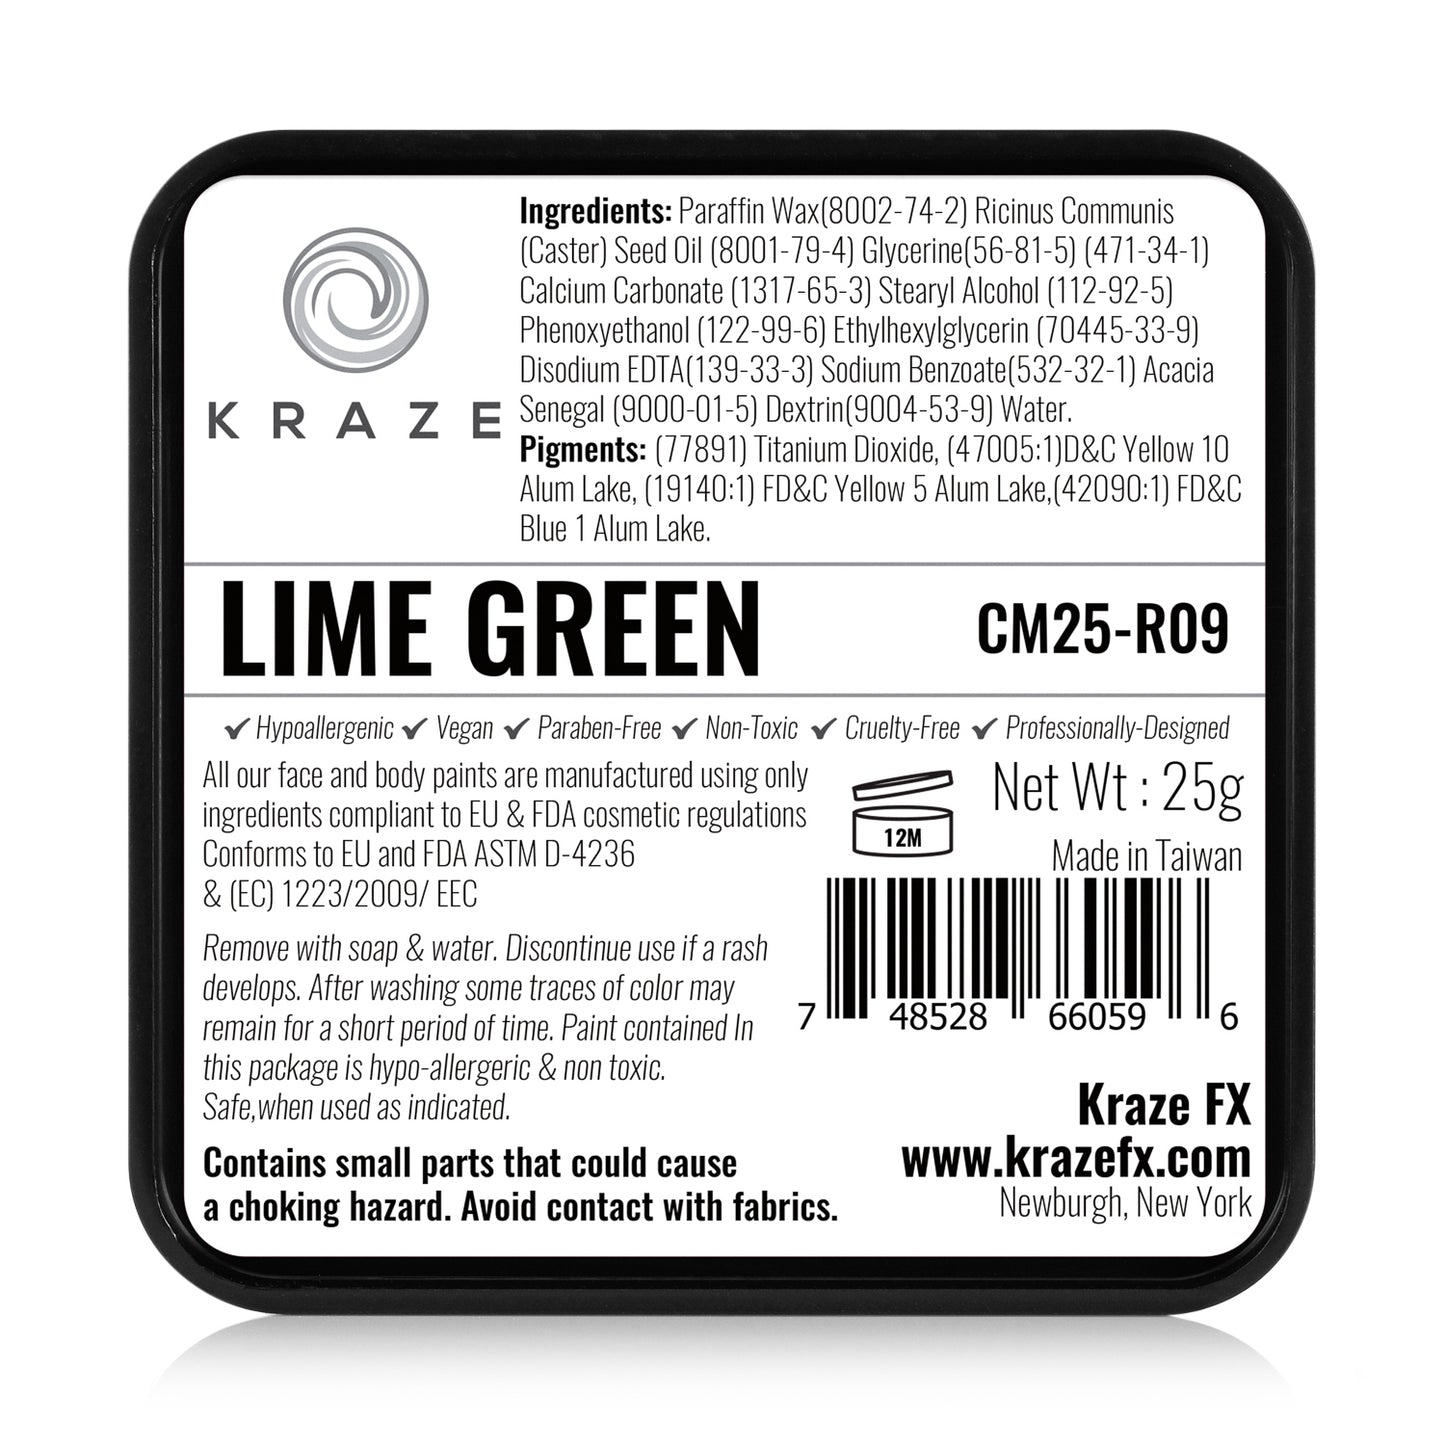 Kraze FX Face & Body Paint - Lime Green (25 gm)